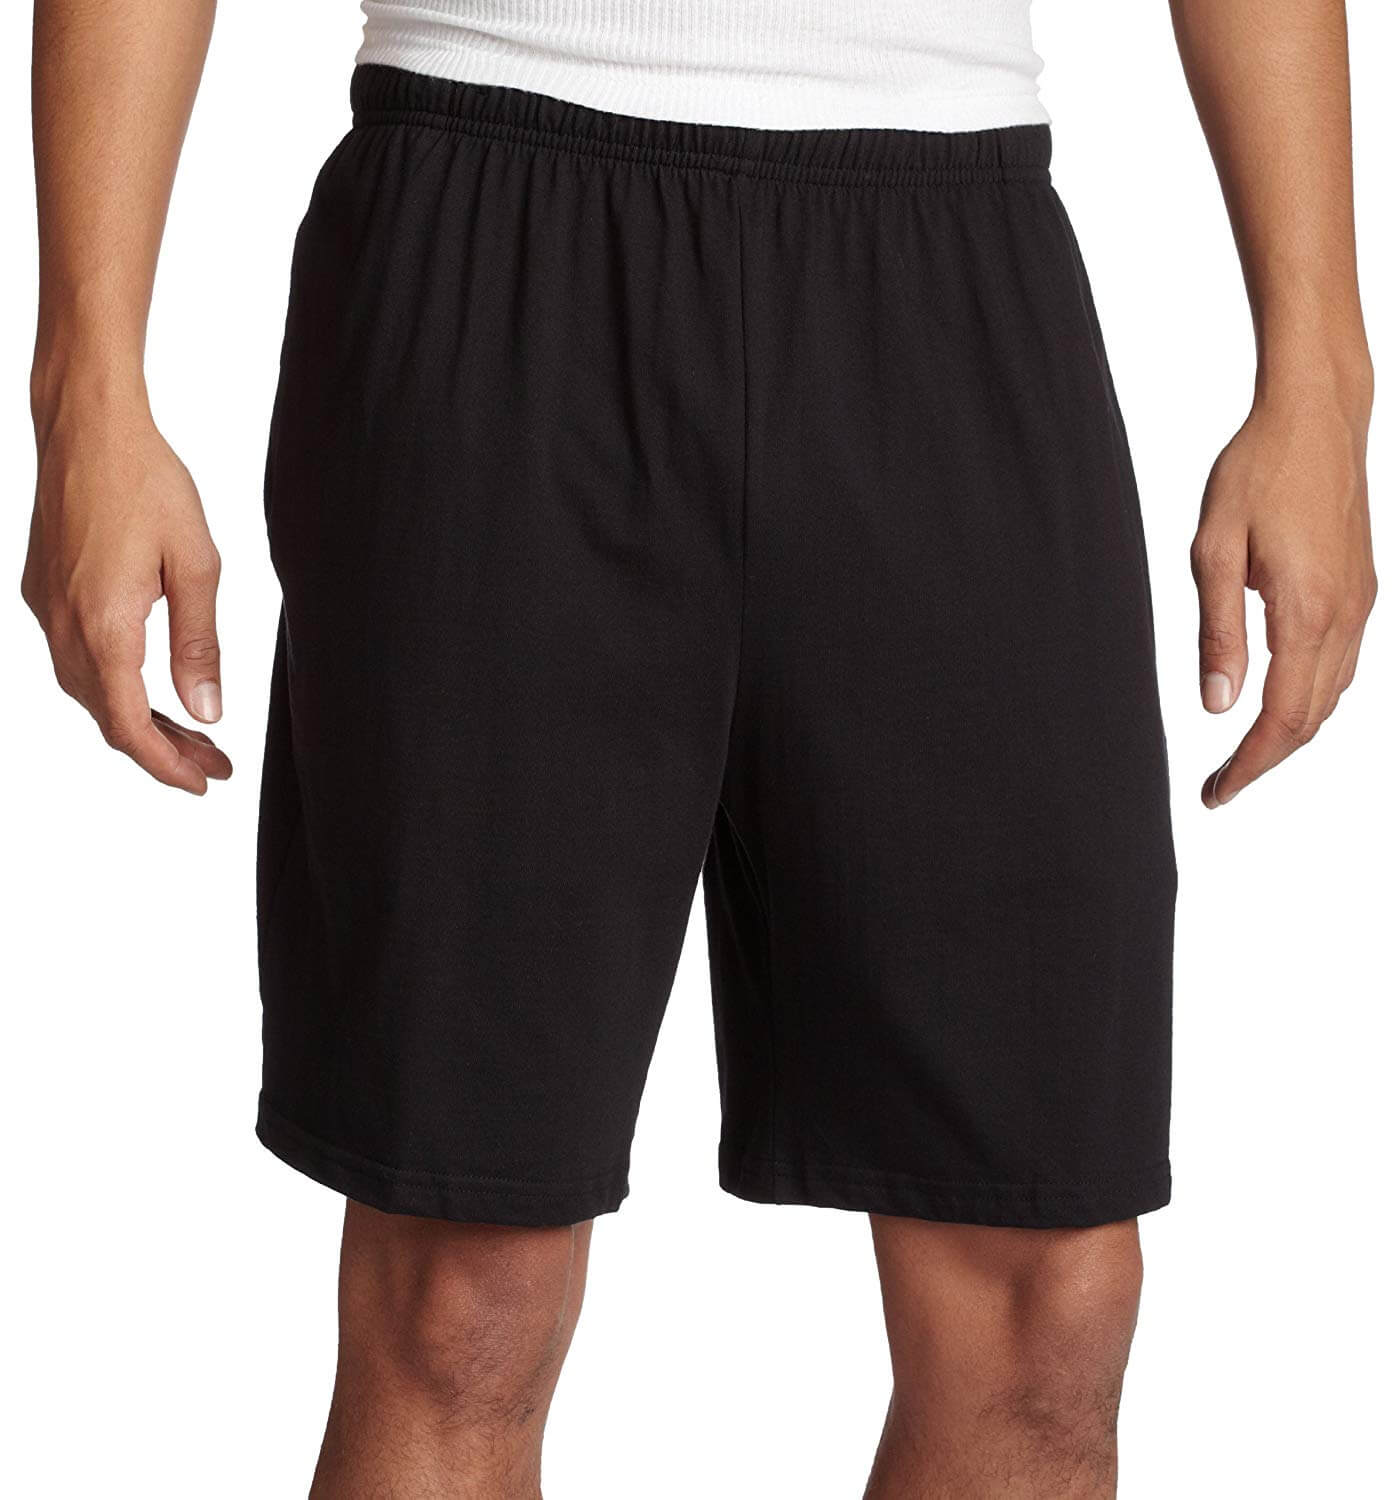 cuffed shorts mens